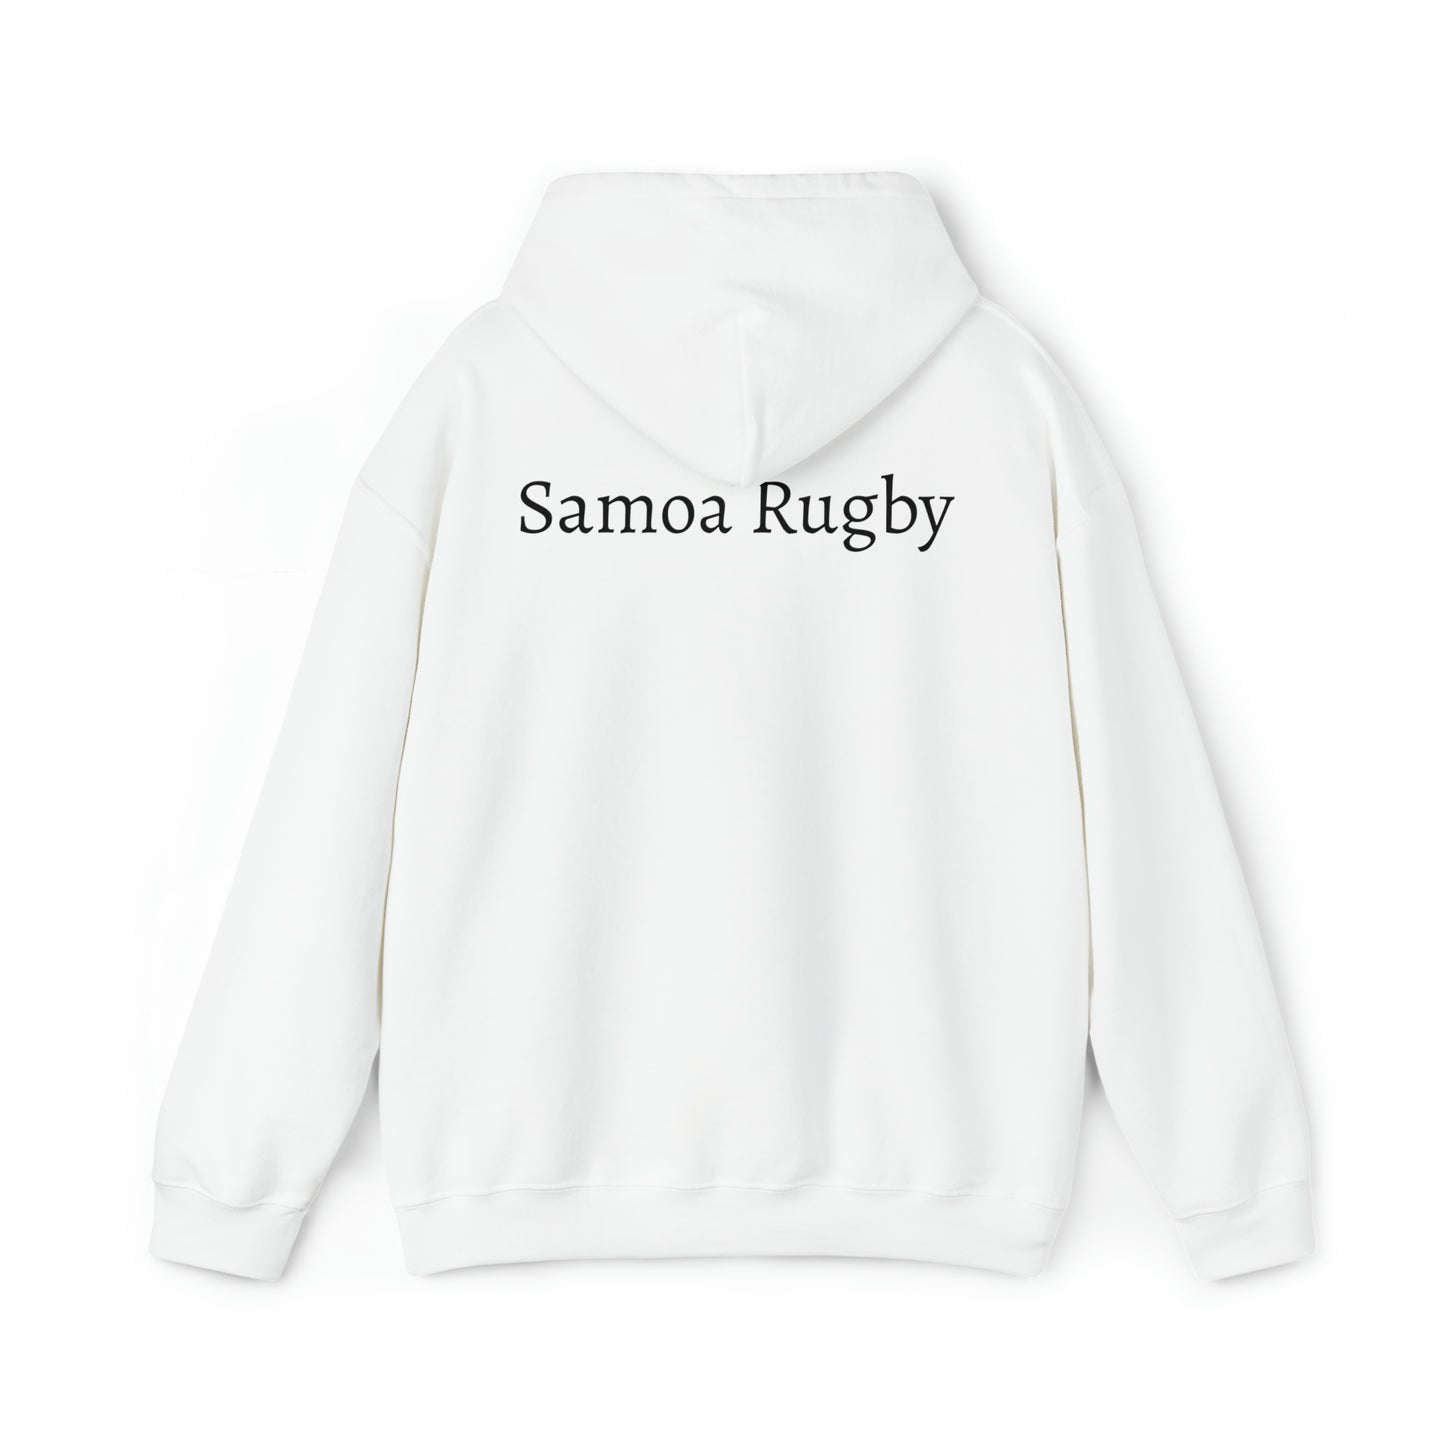 Ready Samoa - light hoodies